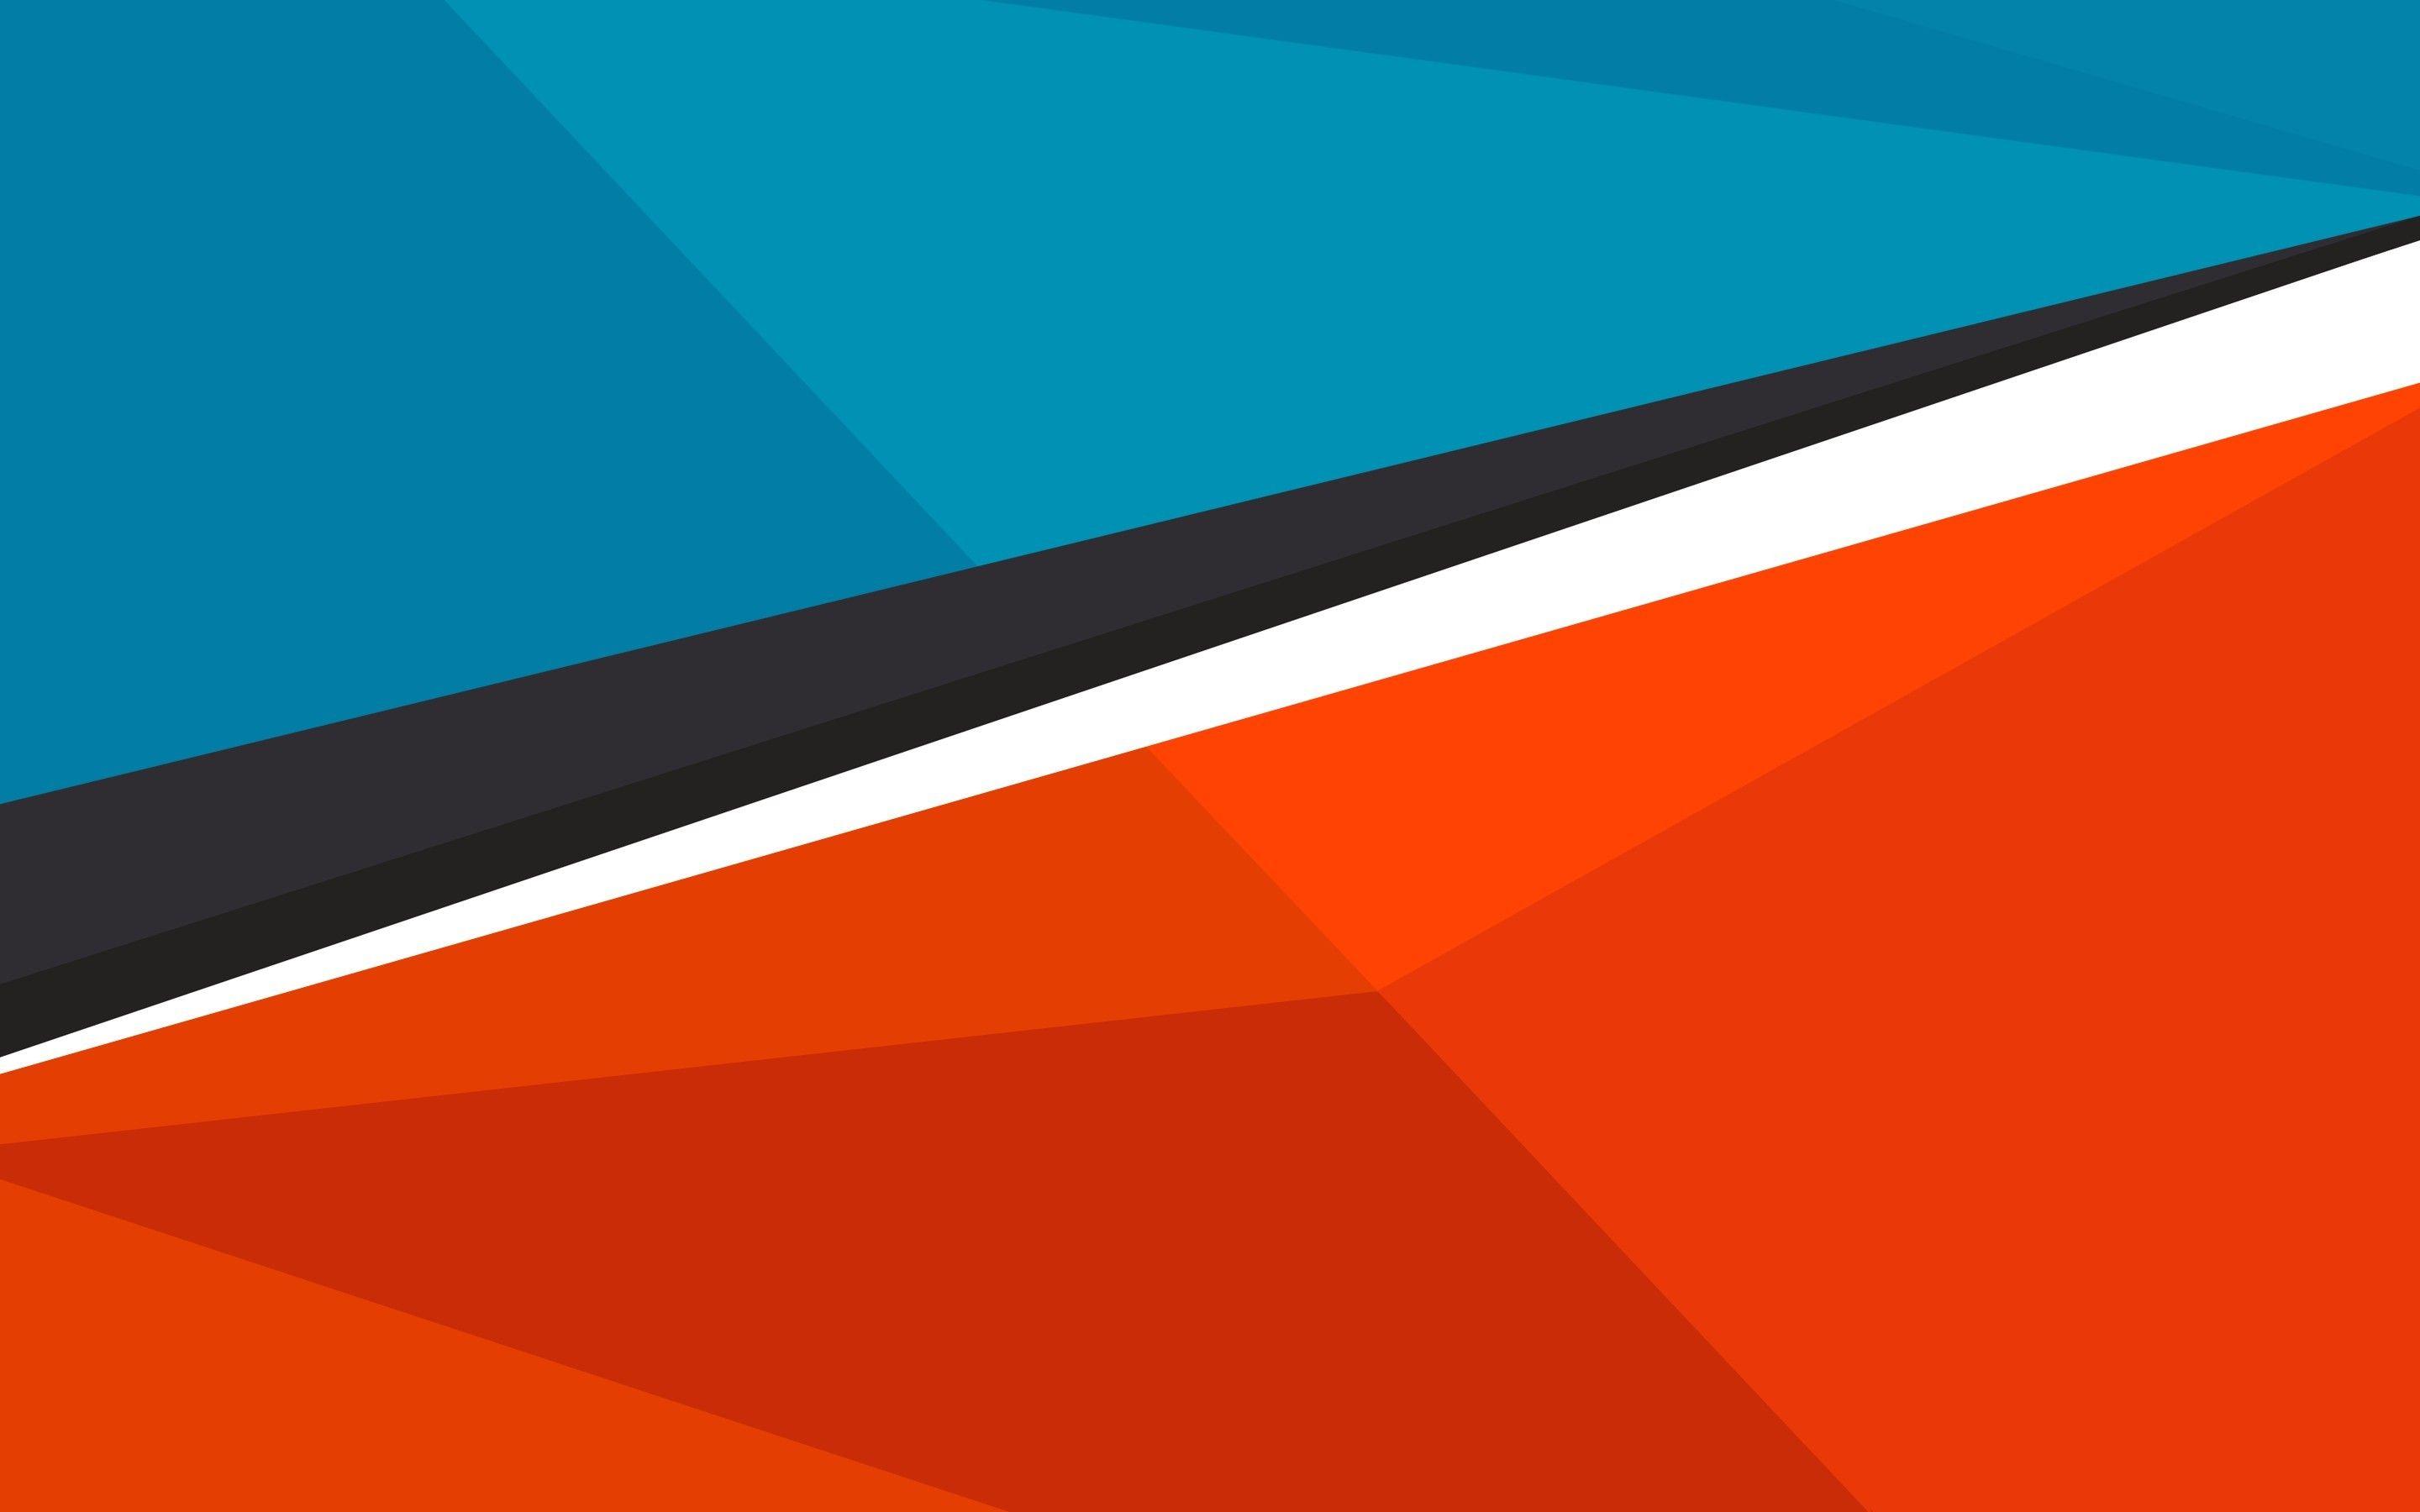 Blue And Orange Desktop Wallpapers - Top Free Blue And Orange Desktop